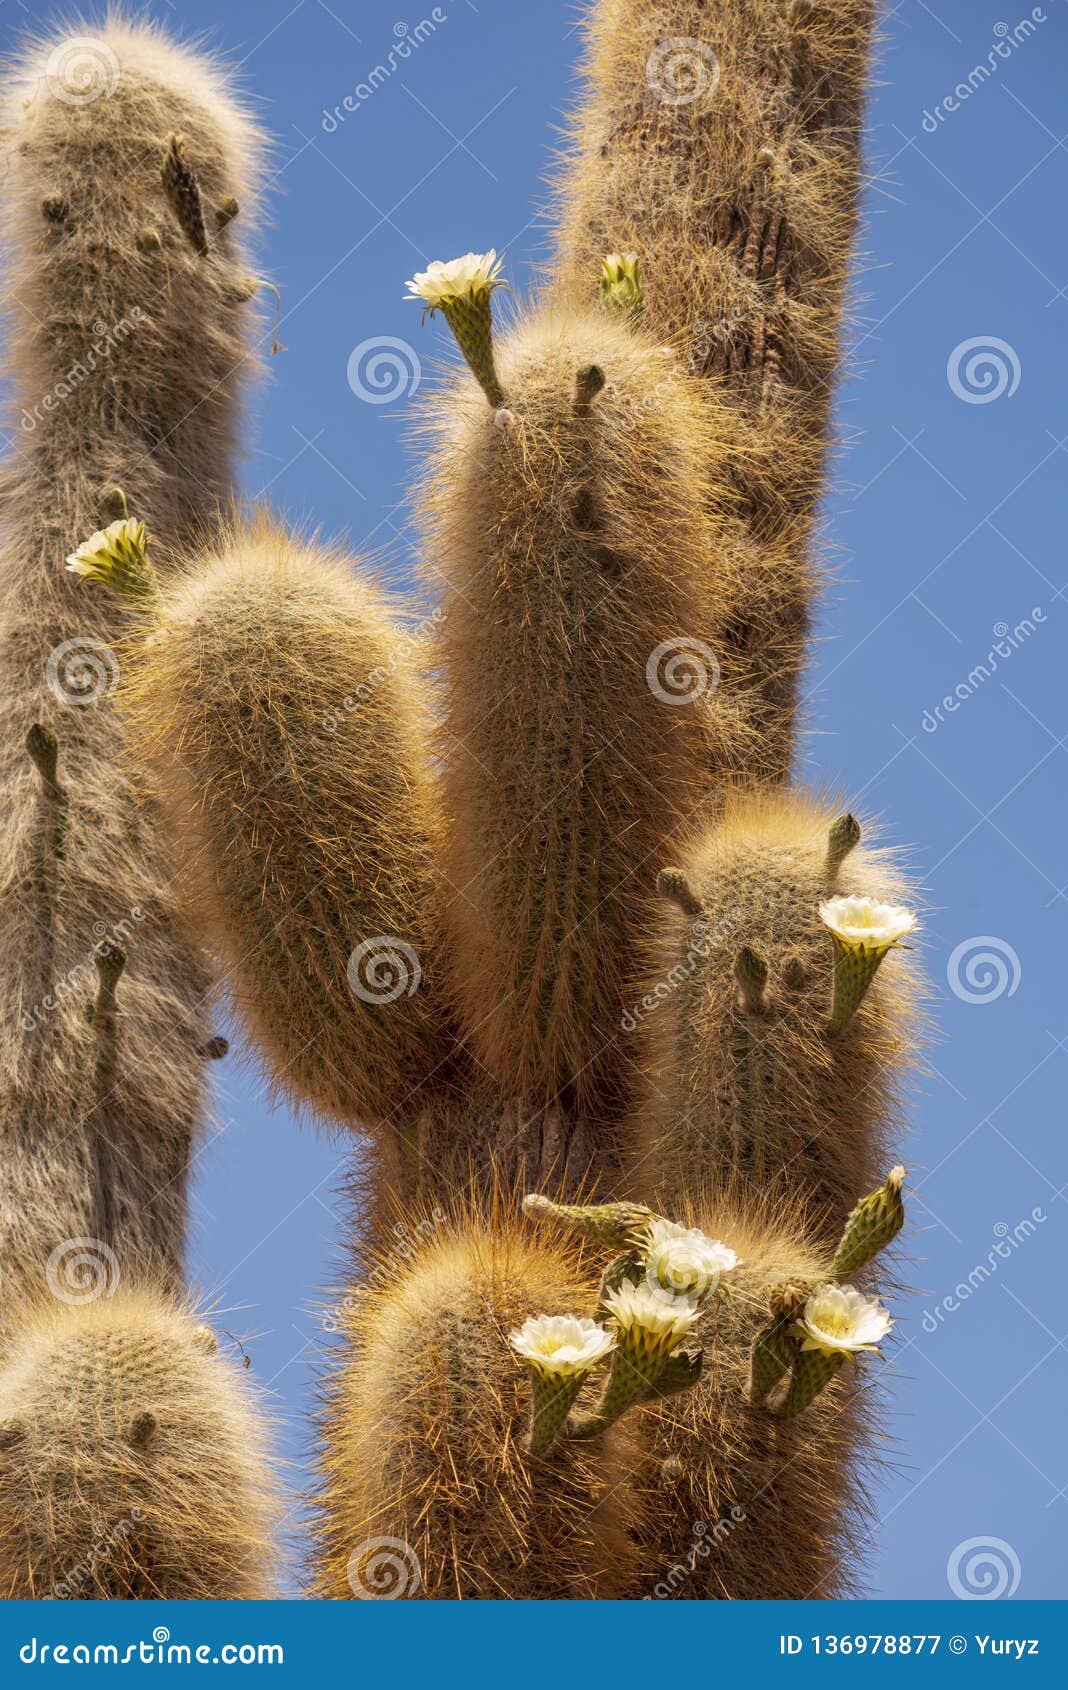 Huge cactus plant stock image. Image of inkahuasi, plant - 136978877